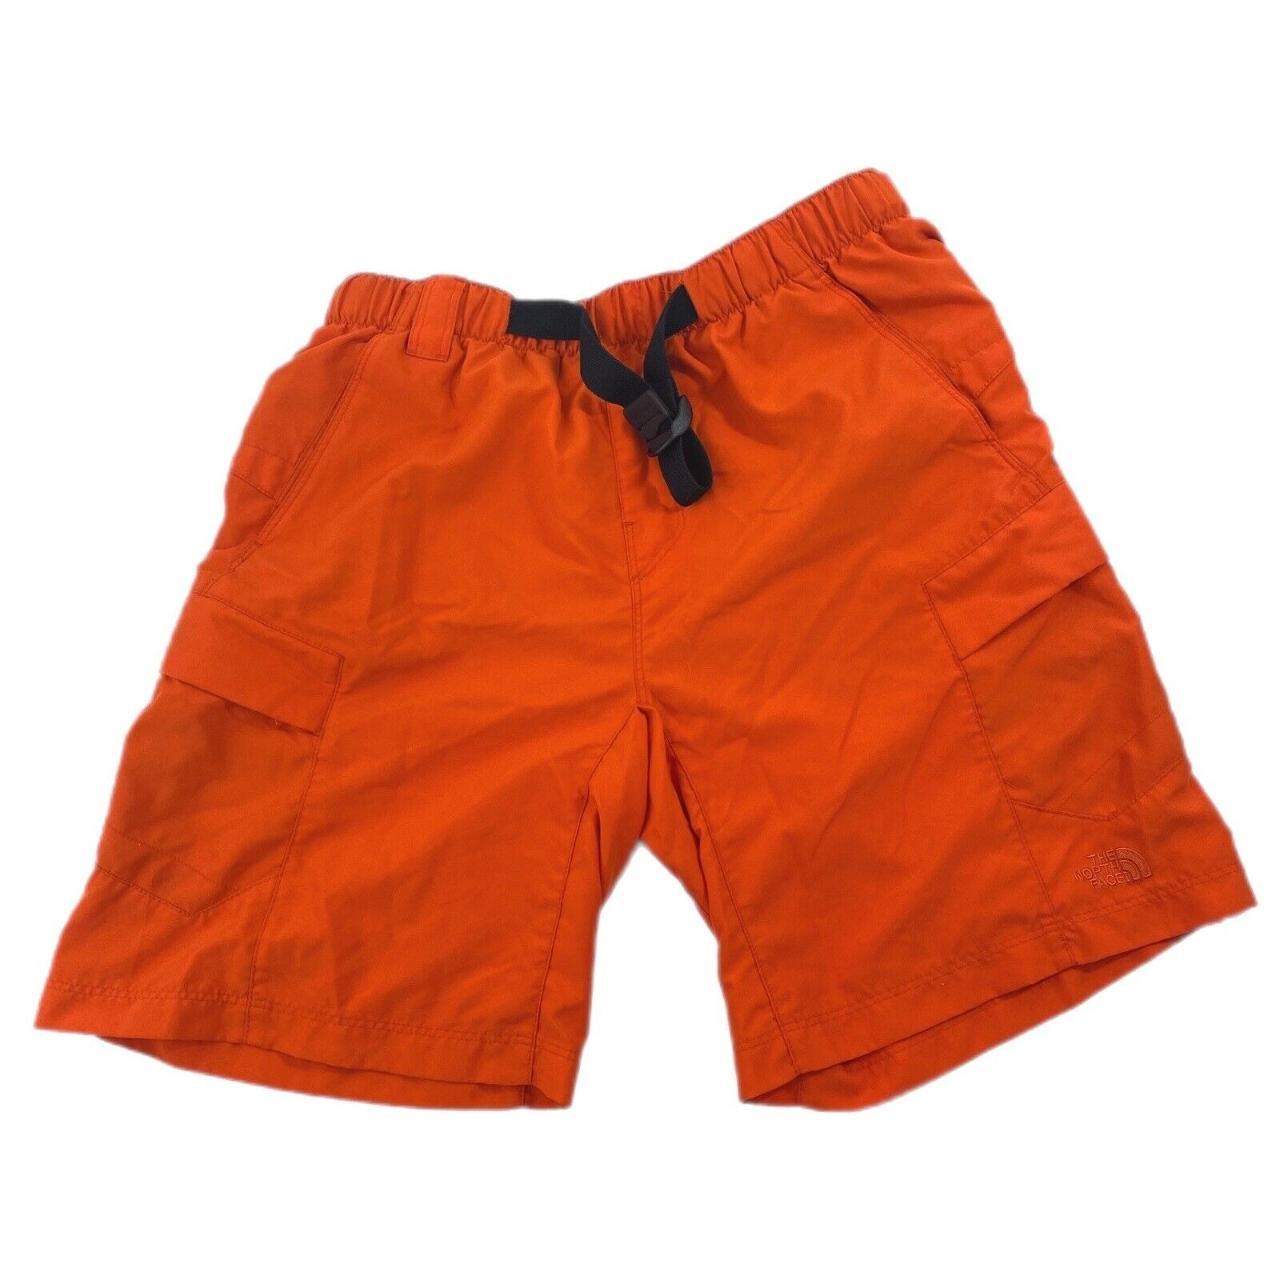 The North Face Men's Orange Shorts